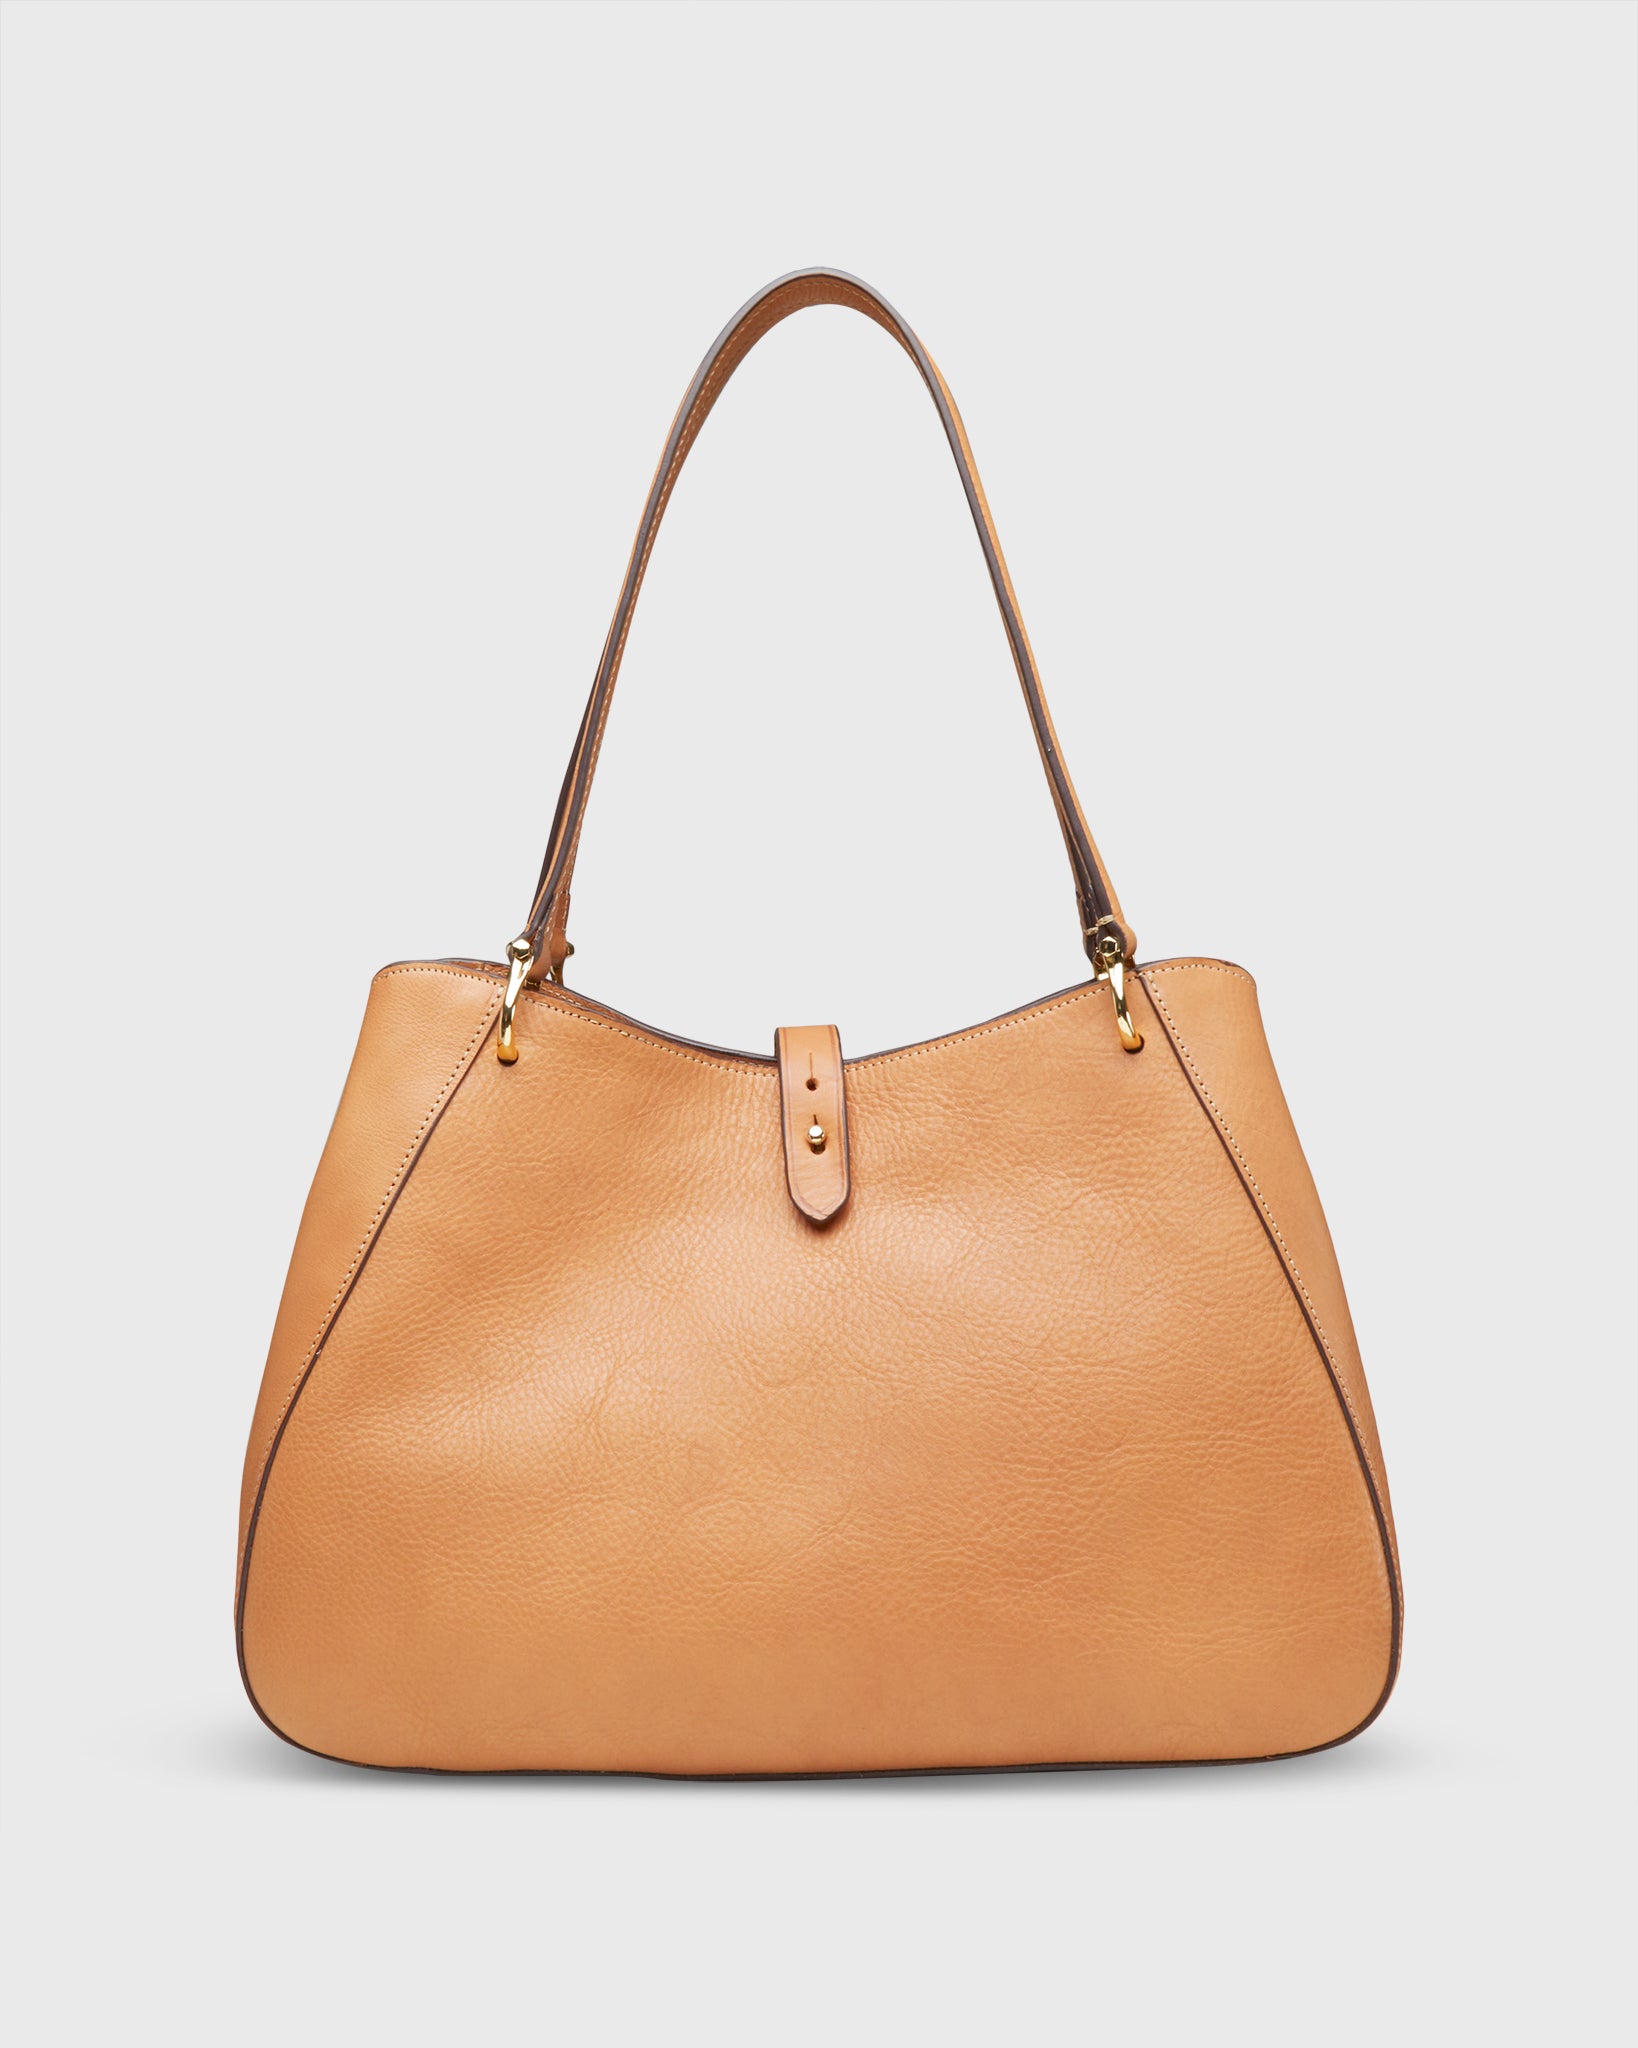 Dooney & Bourke Alto Camilla  Bags, Leather handbags, Fashion bags